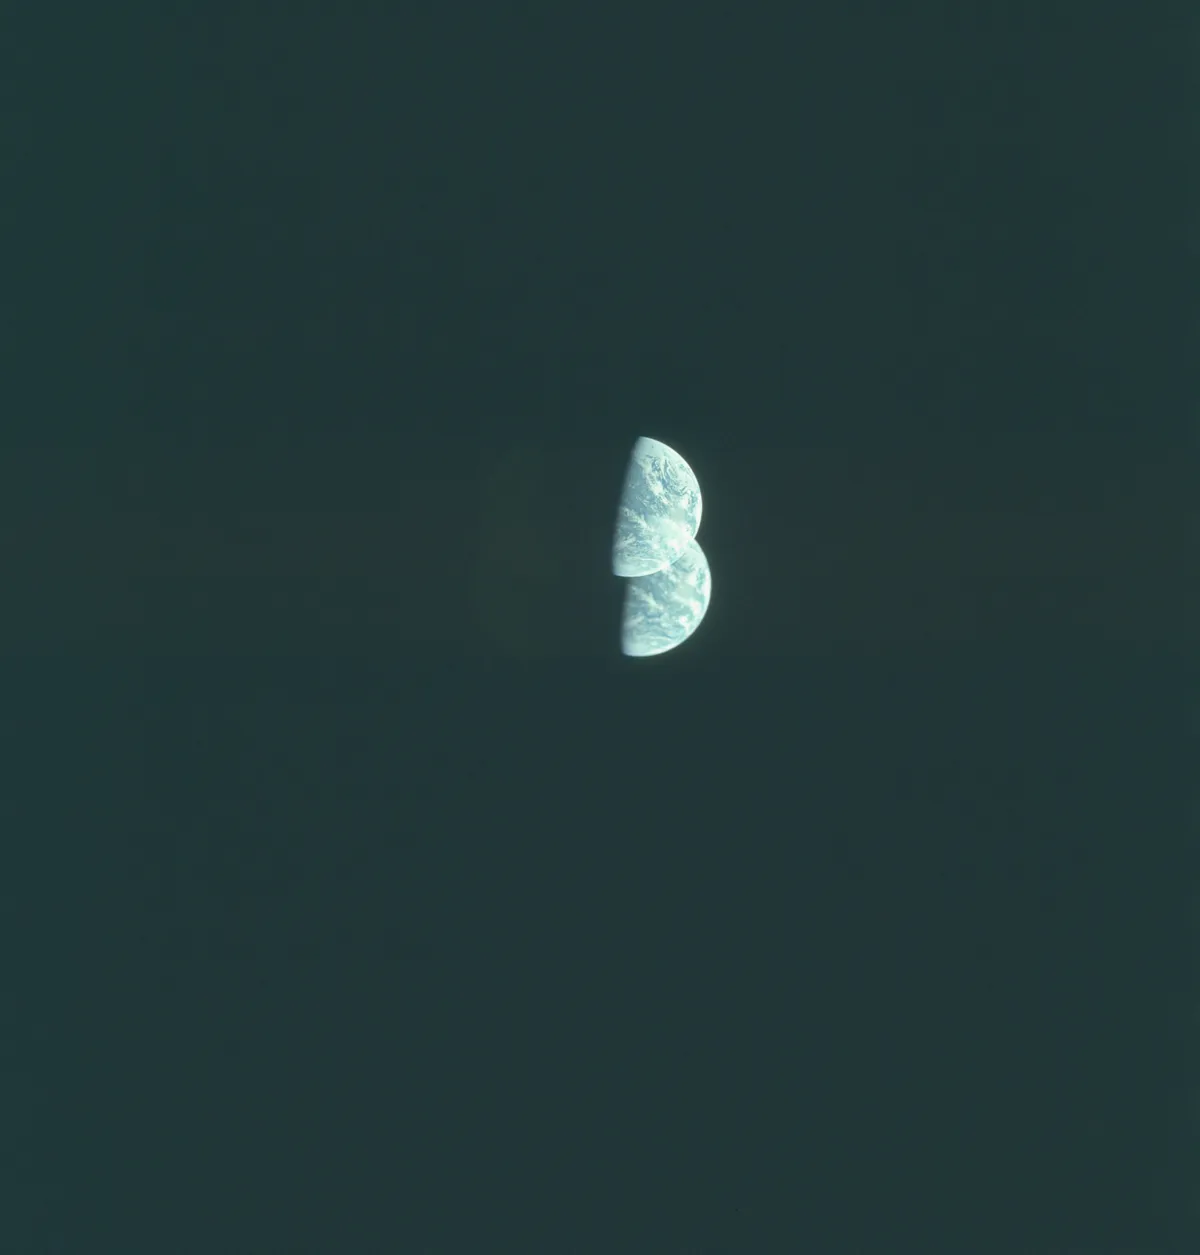 AS08-16-2628 - Apollo 8 Hasselblad image from film magazine 16/A - Trans-Lunar Coast, Lunar Orbit